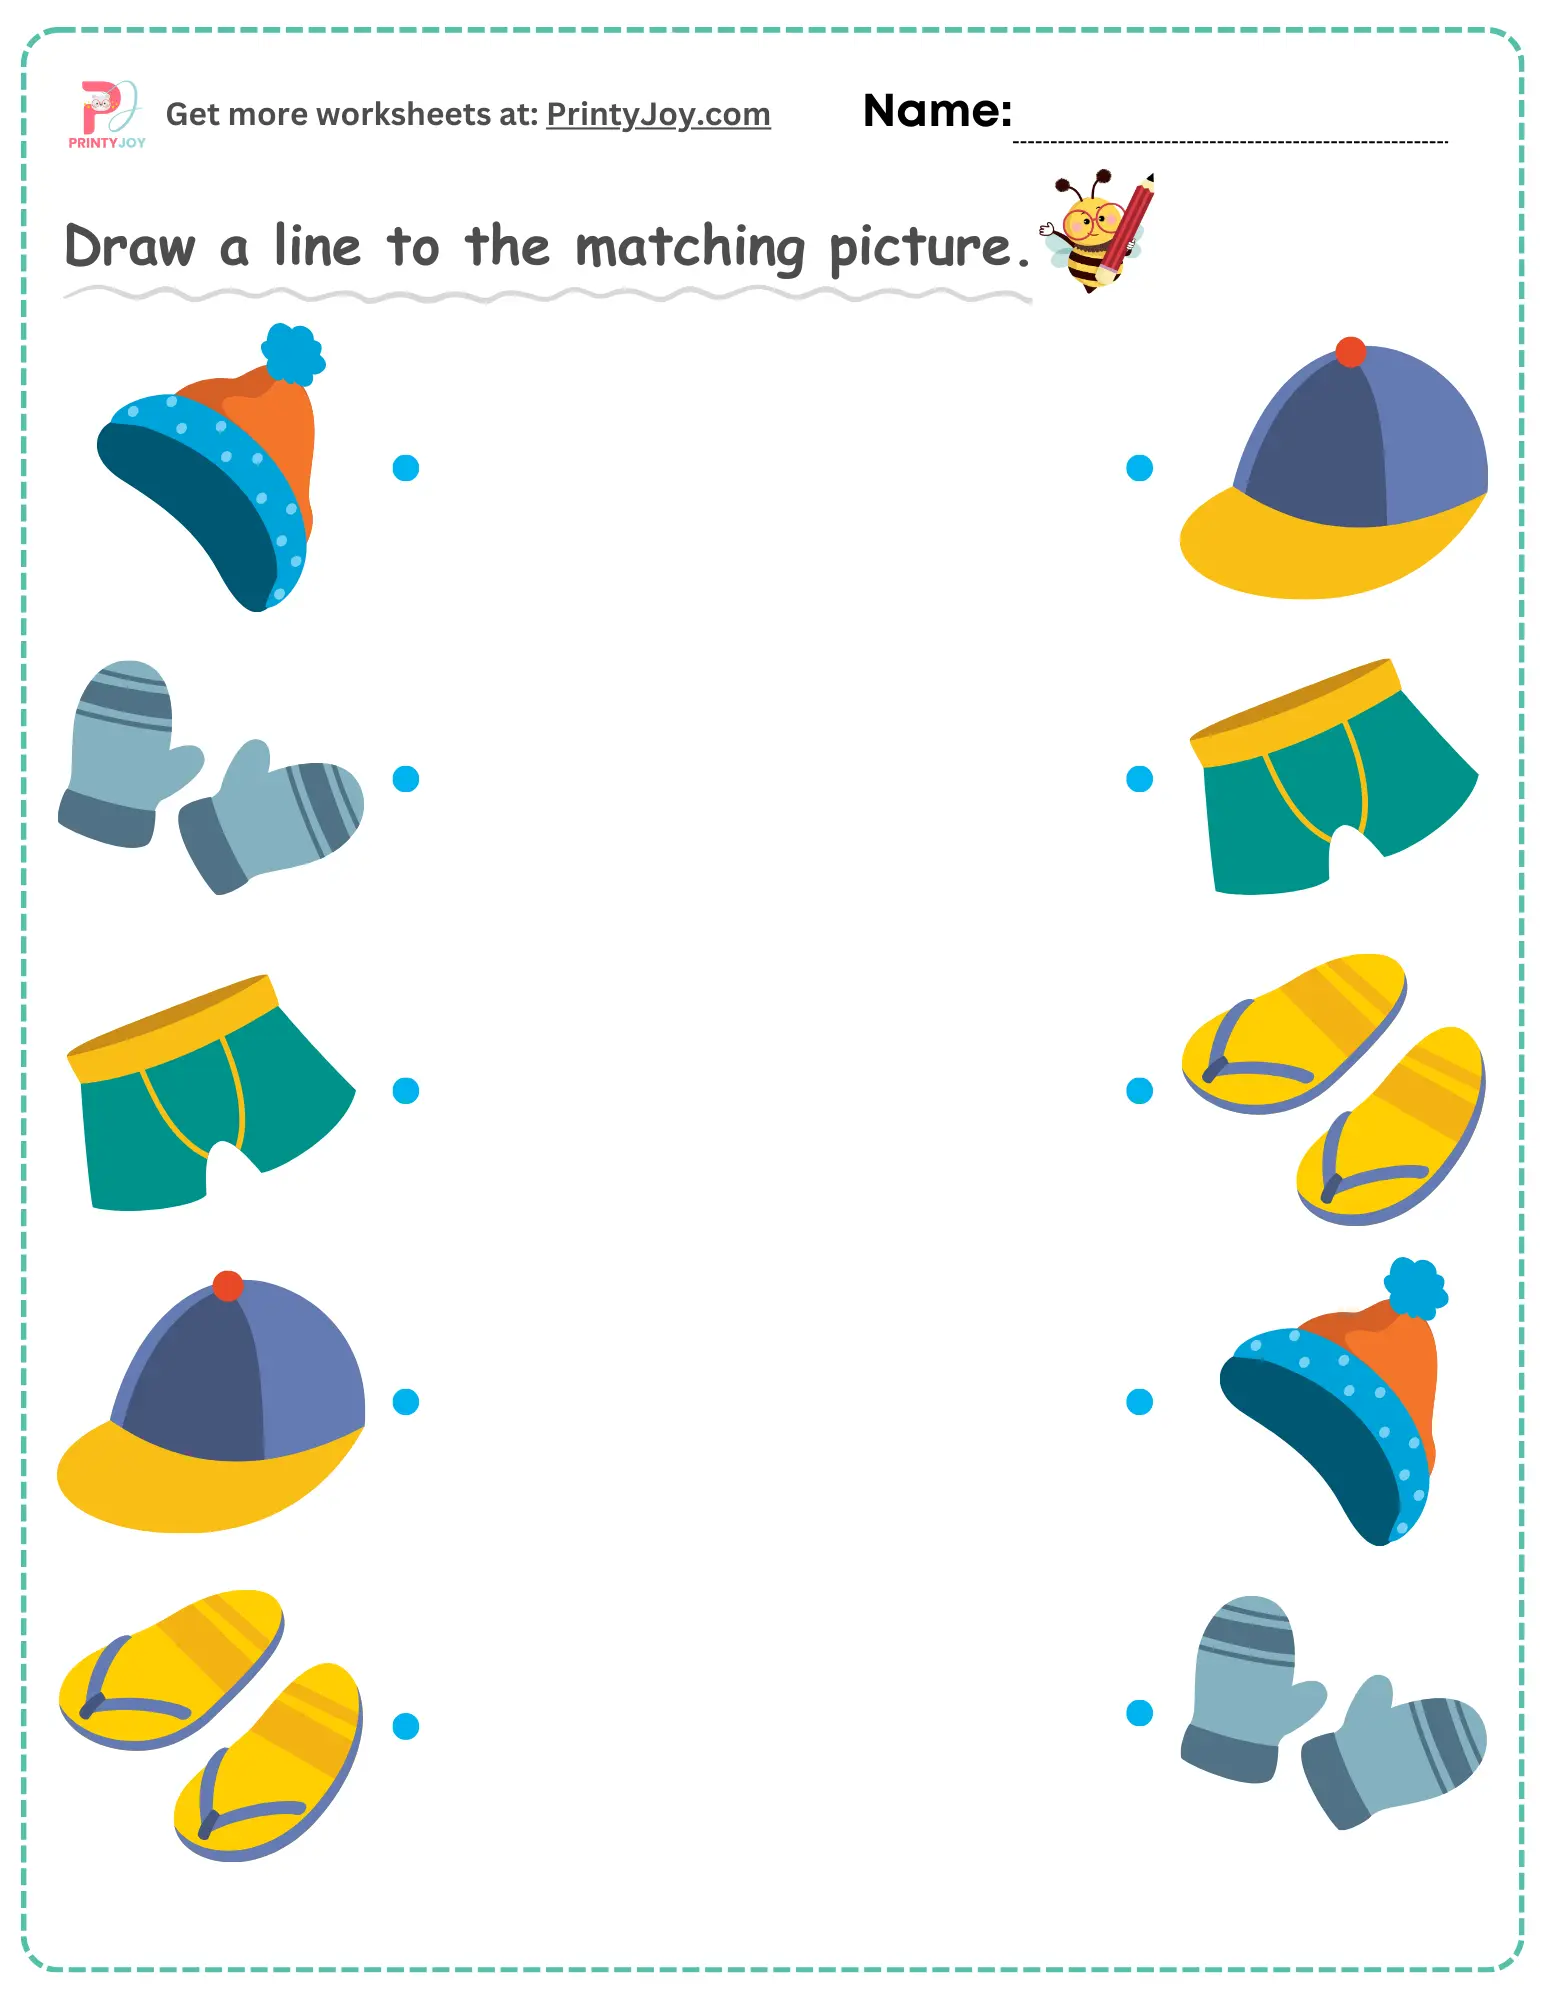 Free Printable Matching Worksheets, clothes matching worksheets